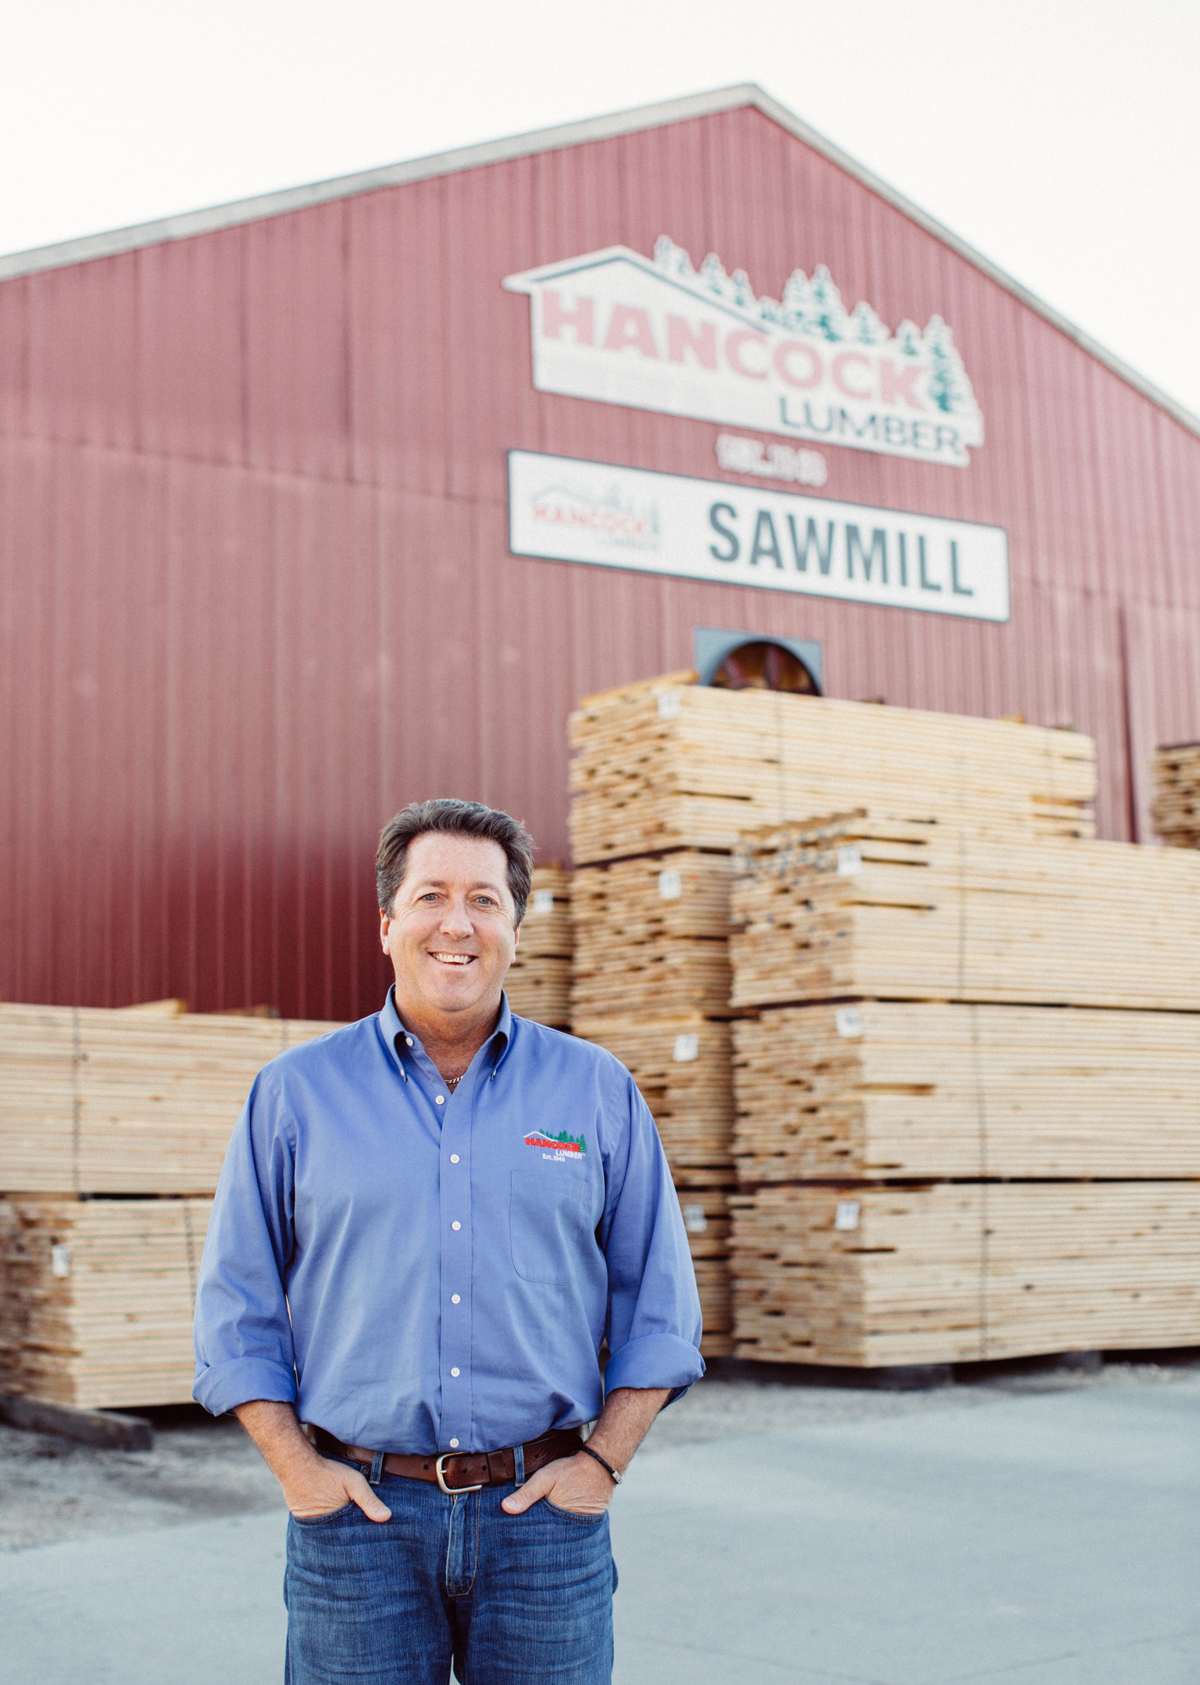 Kevin Hancock, CEO of Hancock Lumber. Photo credit: Jessica Weiser